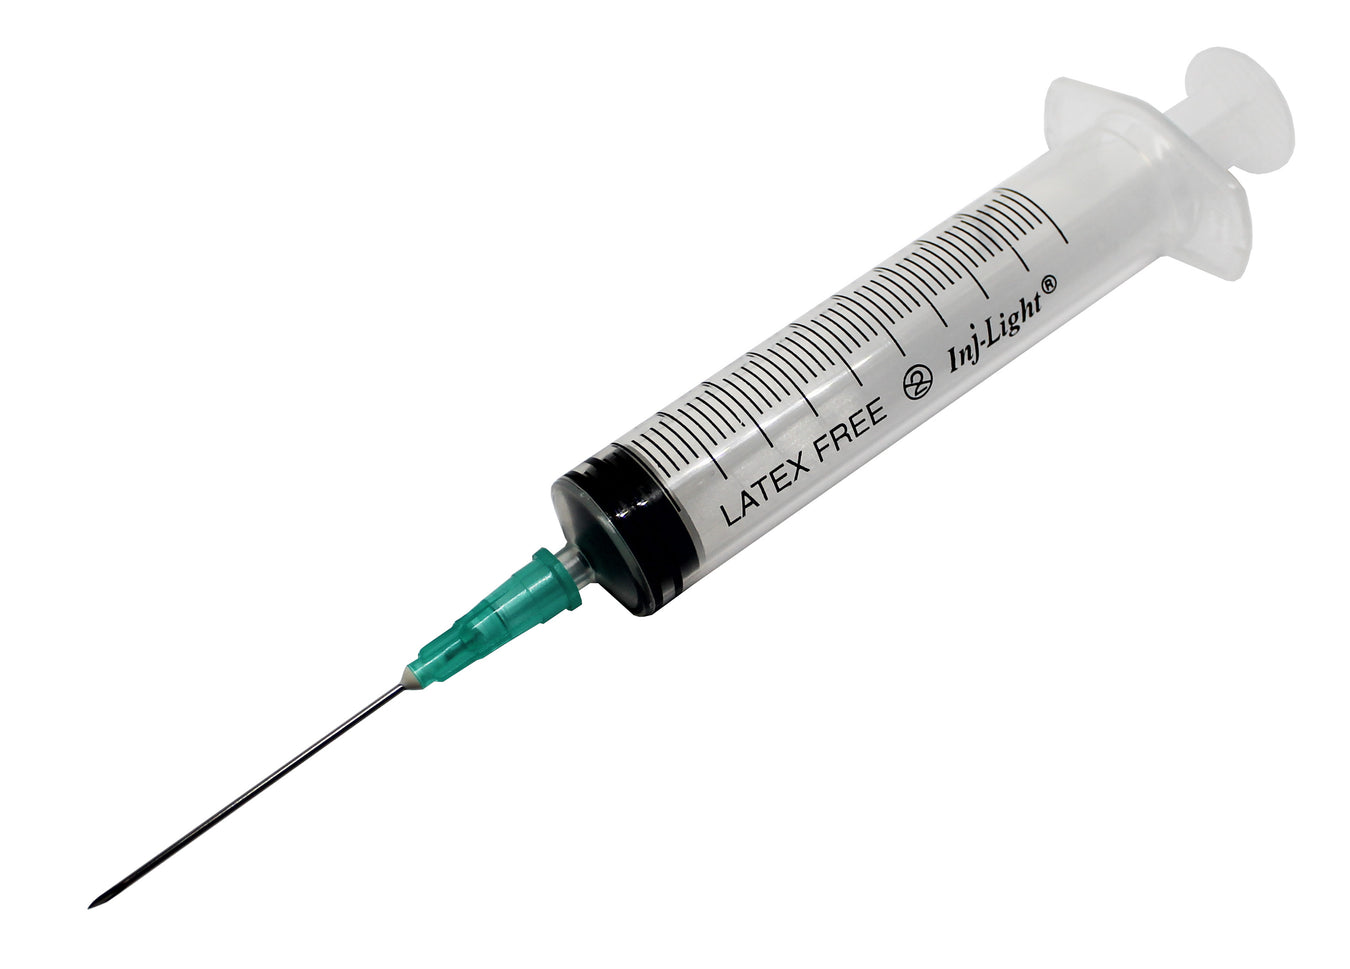 sterile latex free rays inj/light syringe and needles single use with hypodermic needles